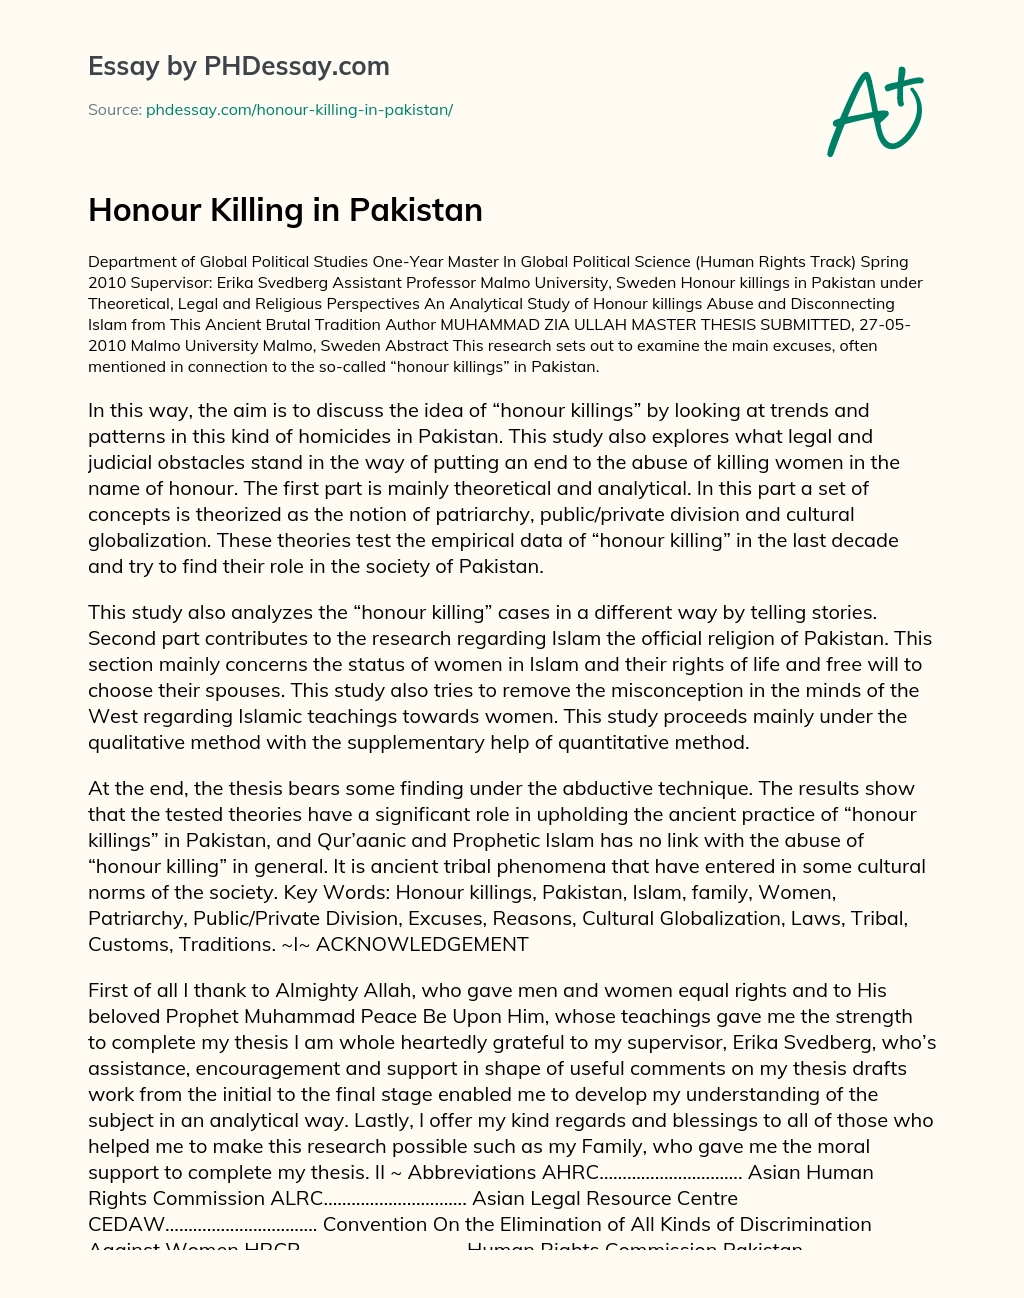 Honour Killing in Pakistan essay